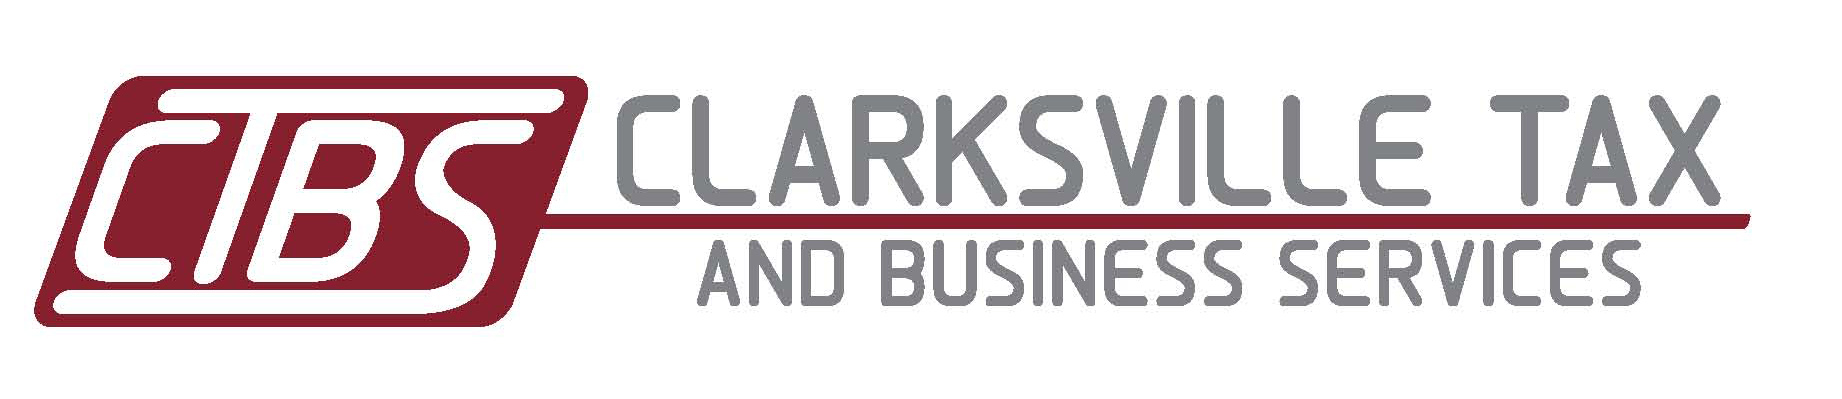 Clarksville Tax and Business Services, LLC 603 E Main St, Clarksville Texas 75426